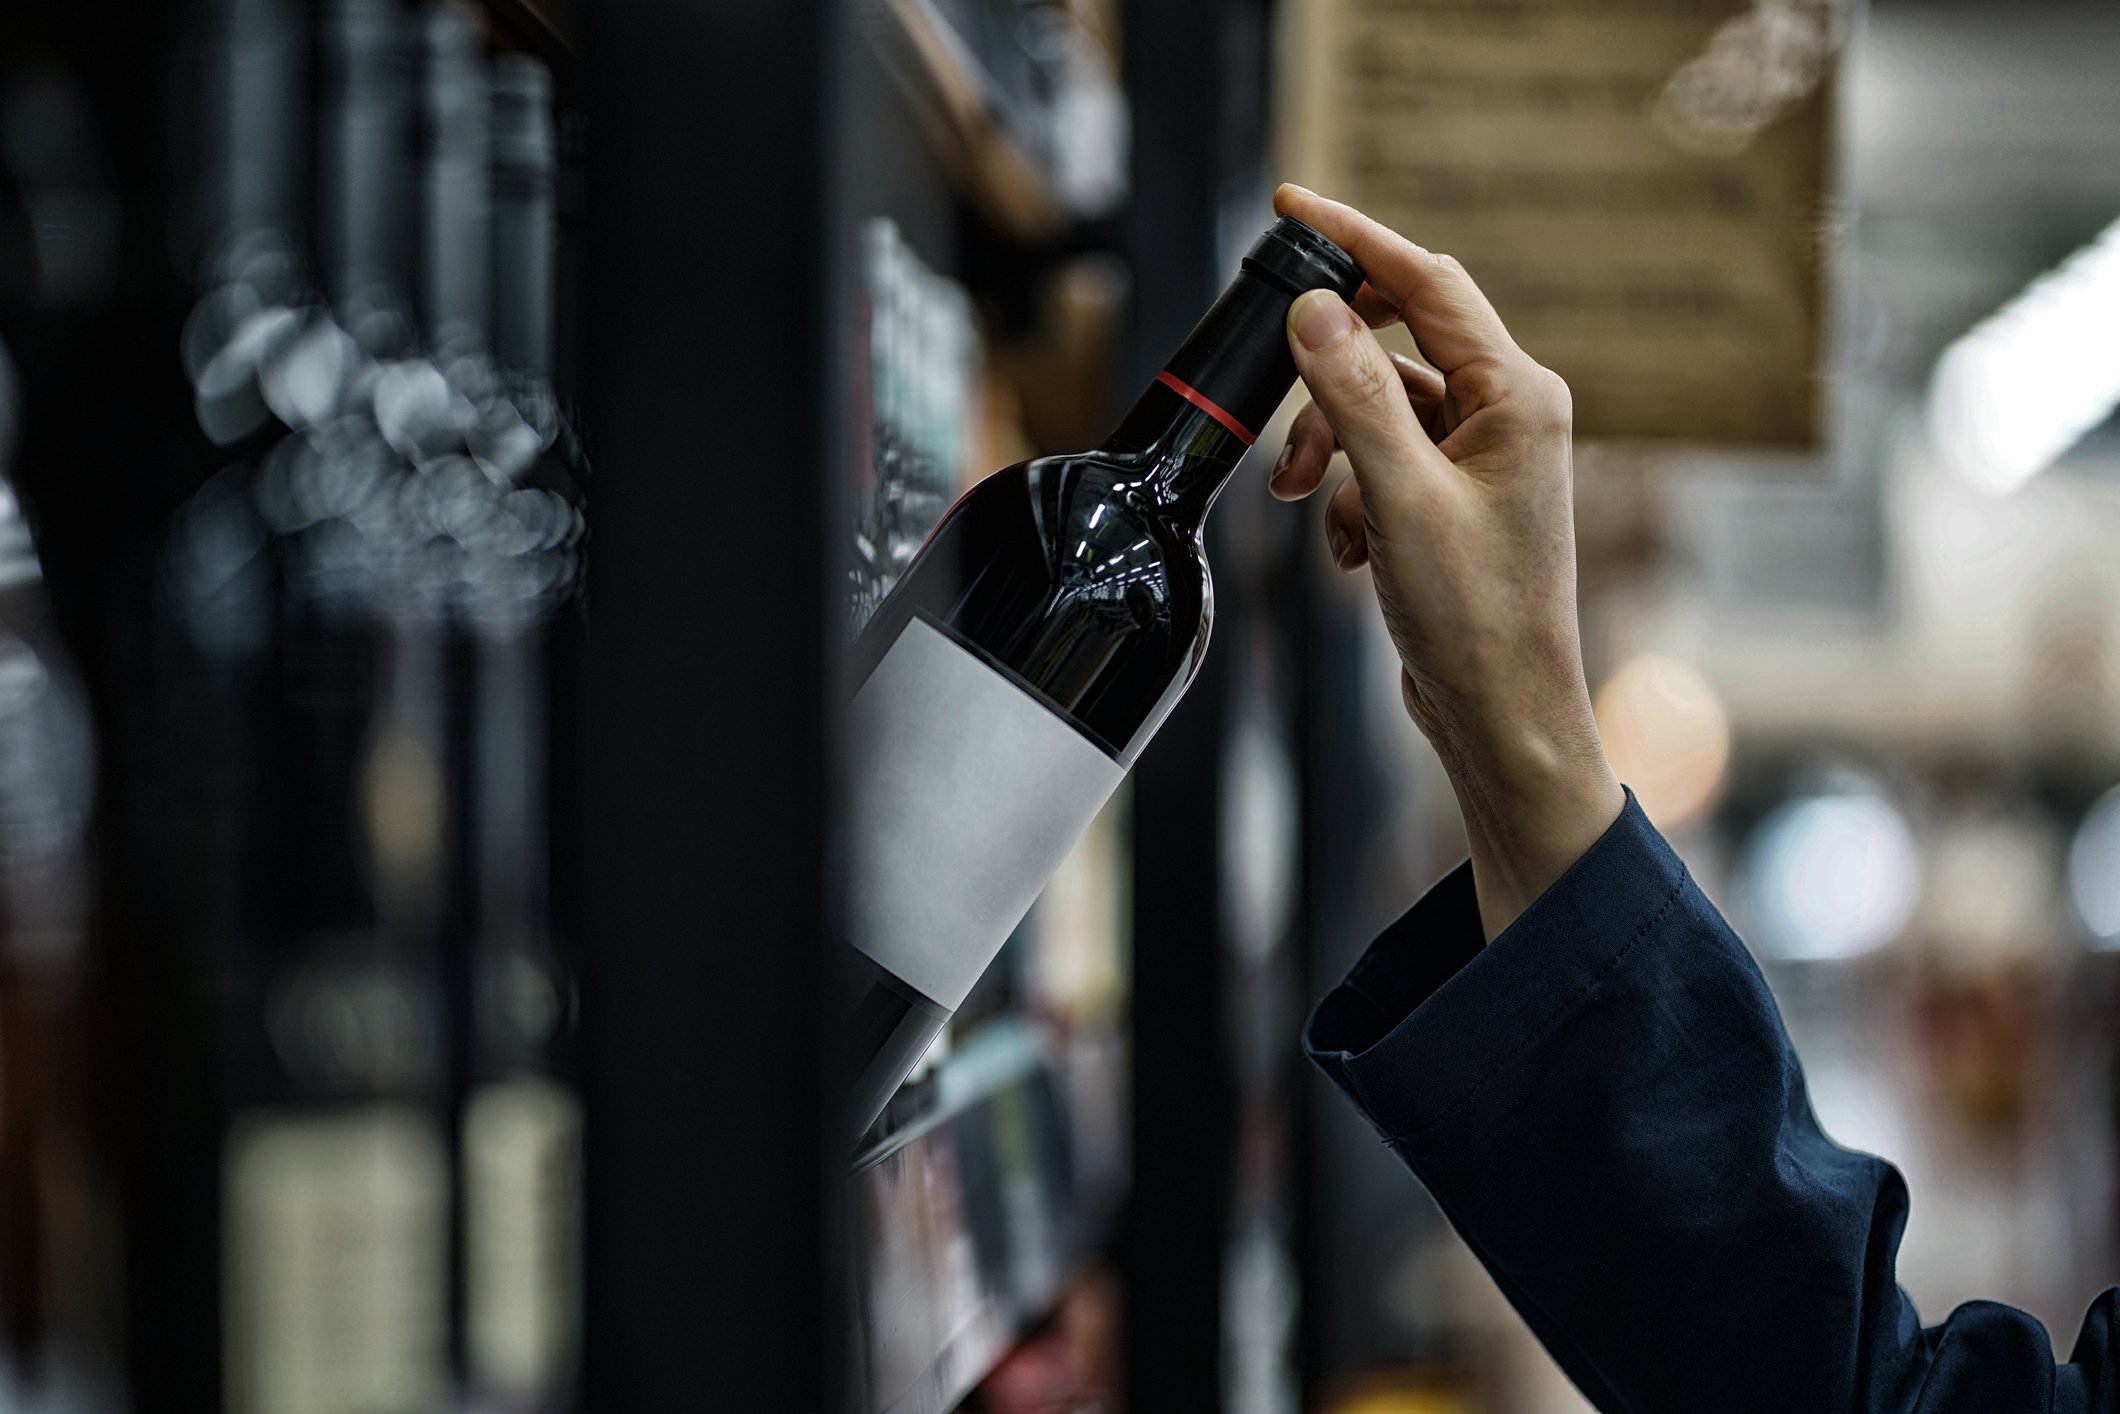 Woman choosing wine bottle in liquor store | Source: Getty Images